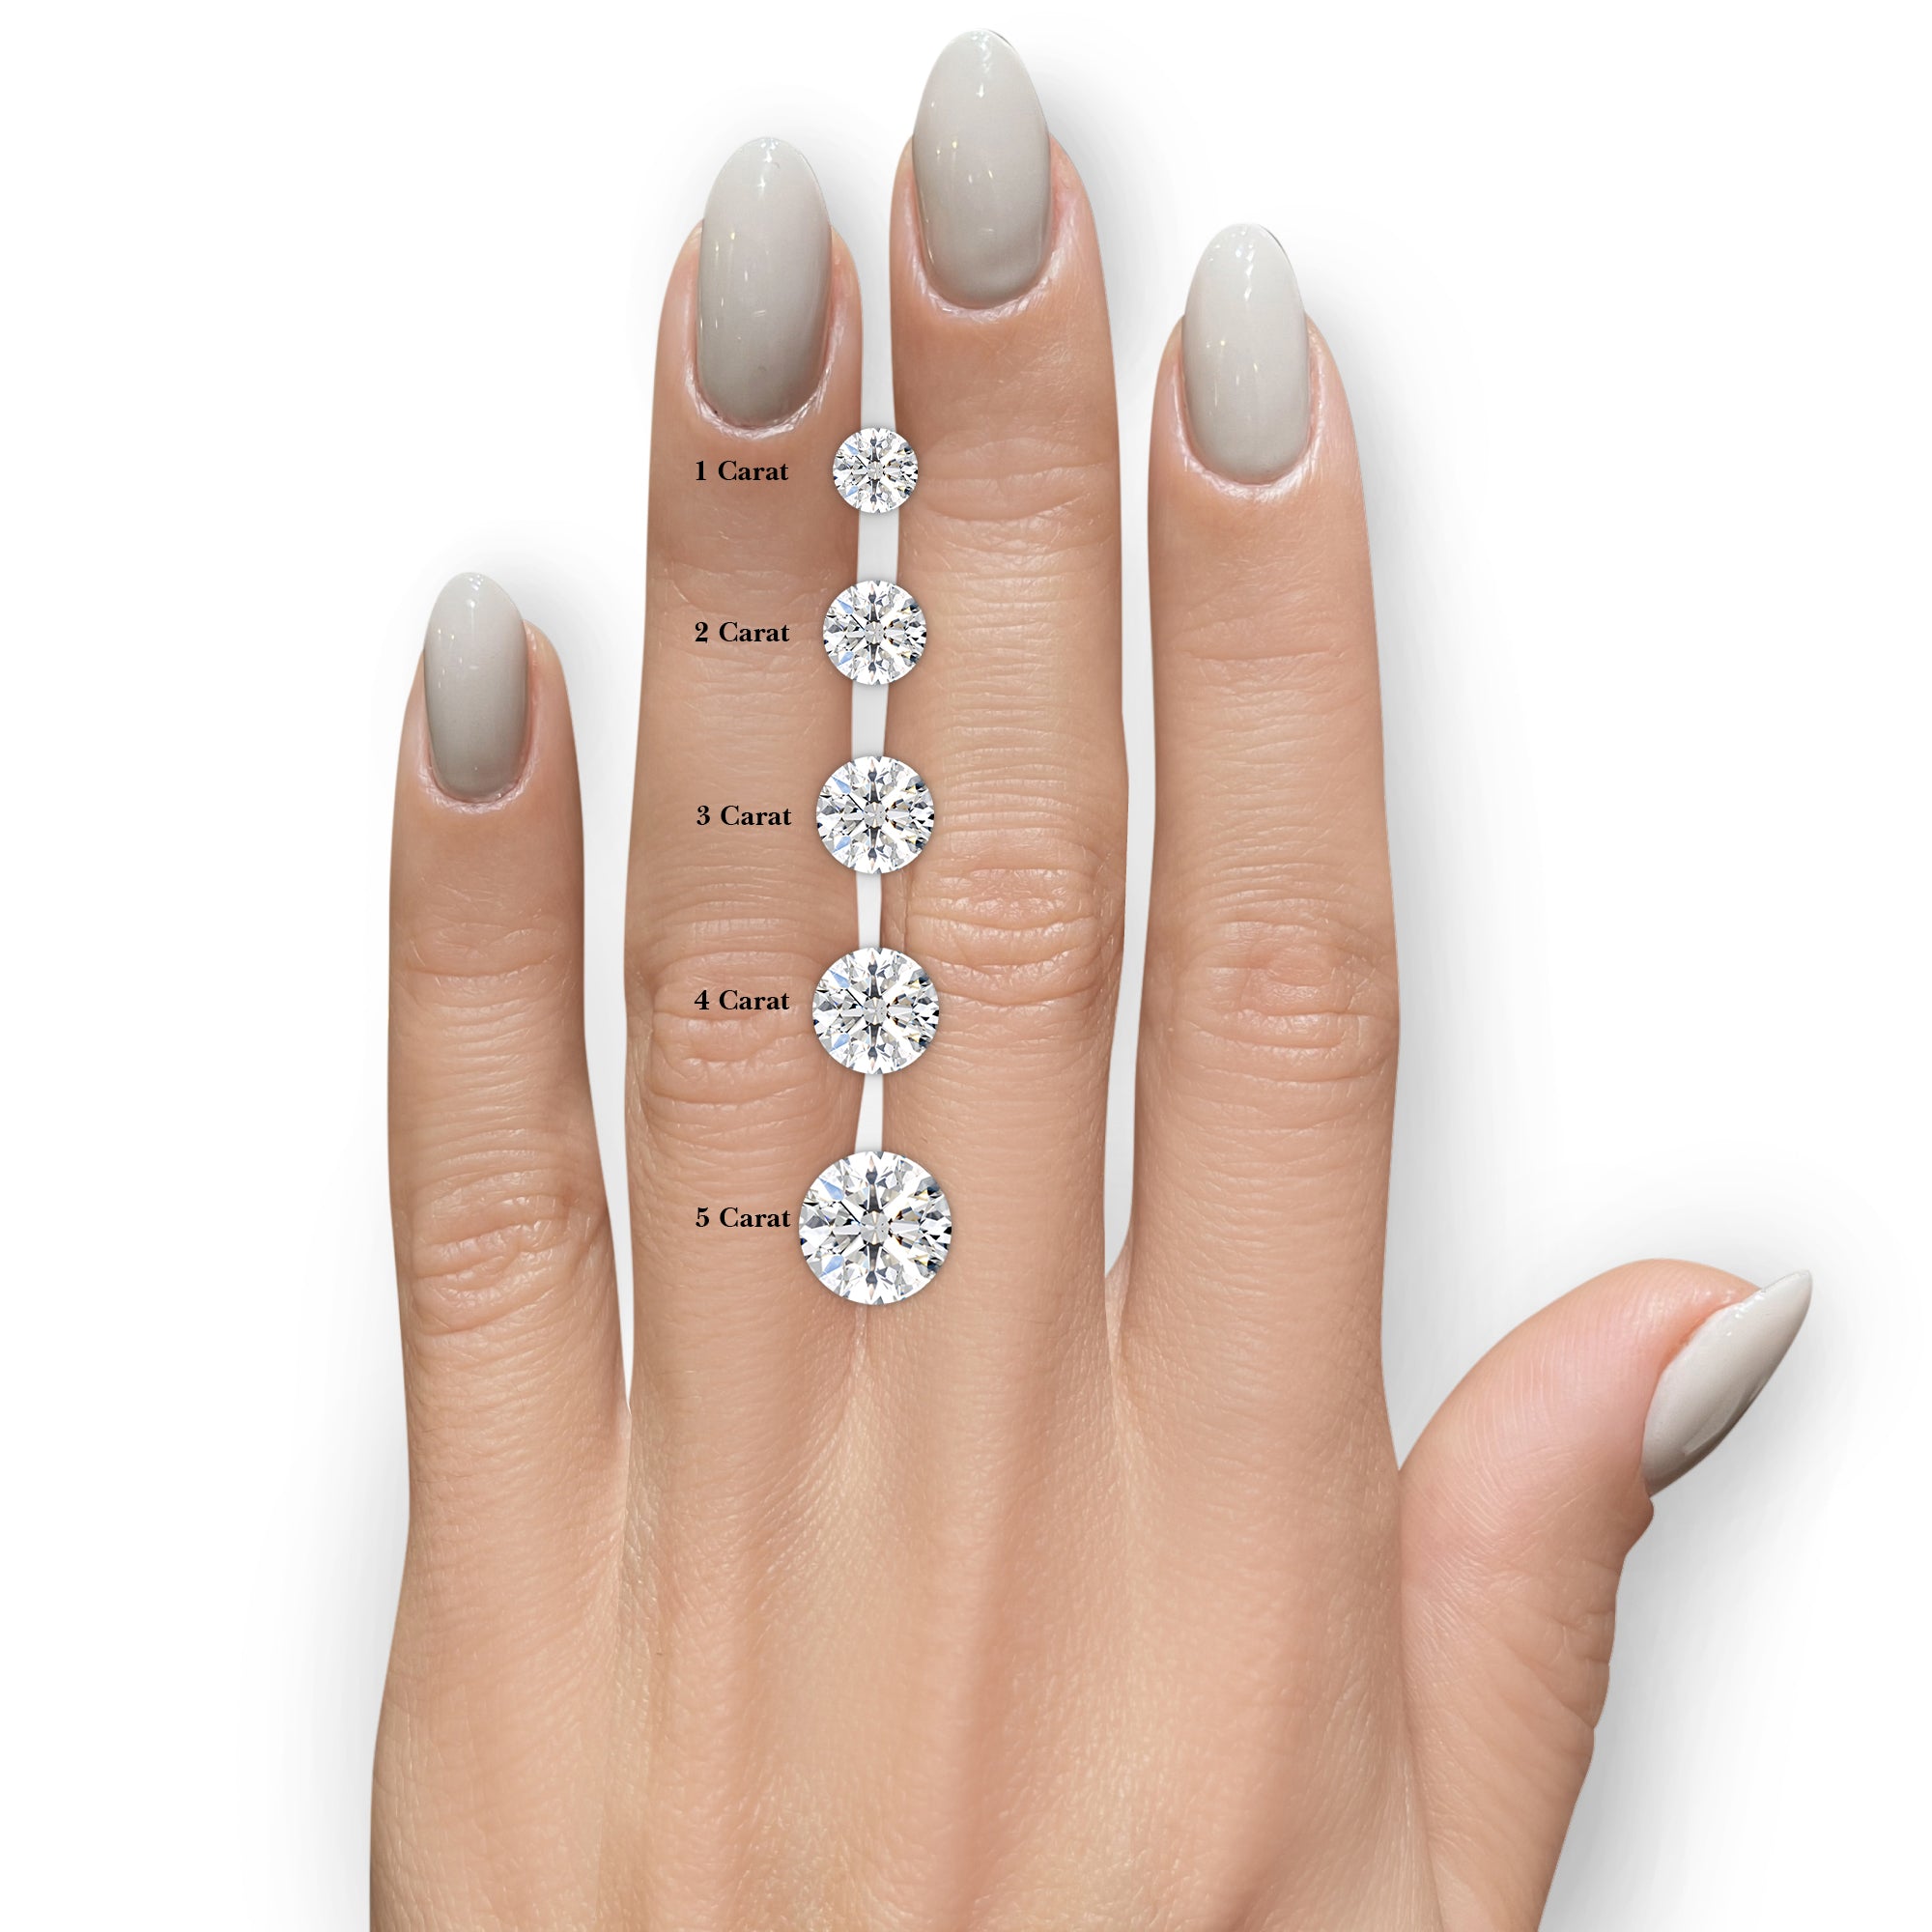 Alex Diamond Engagement Ring -18K White Gold